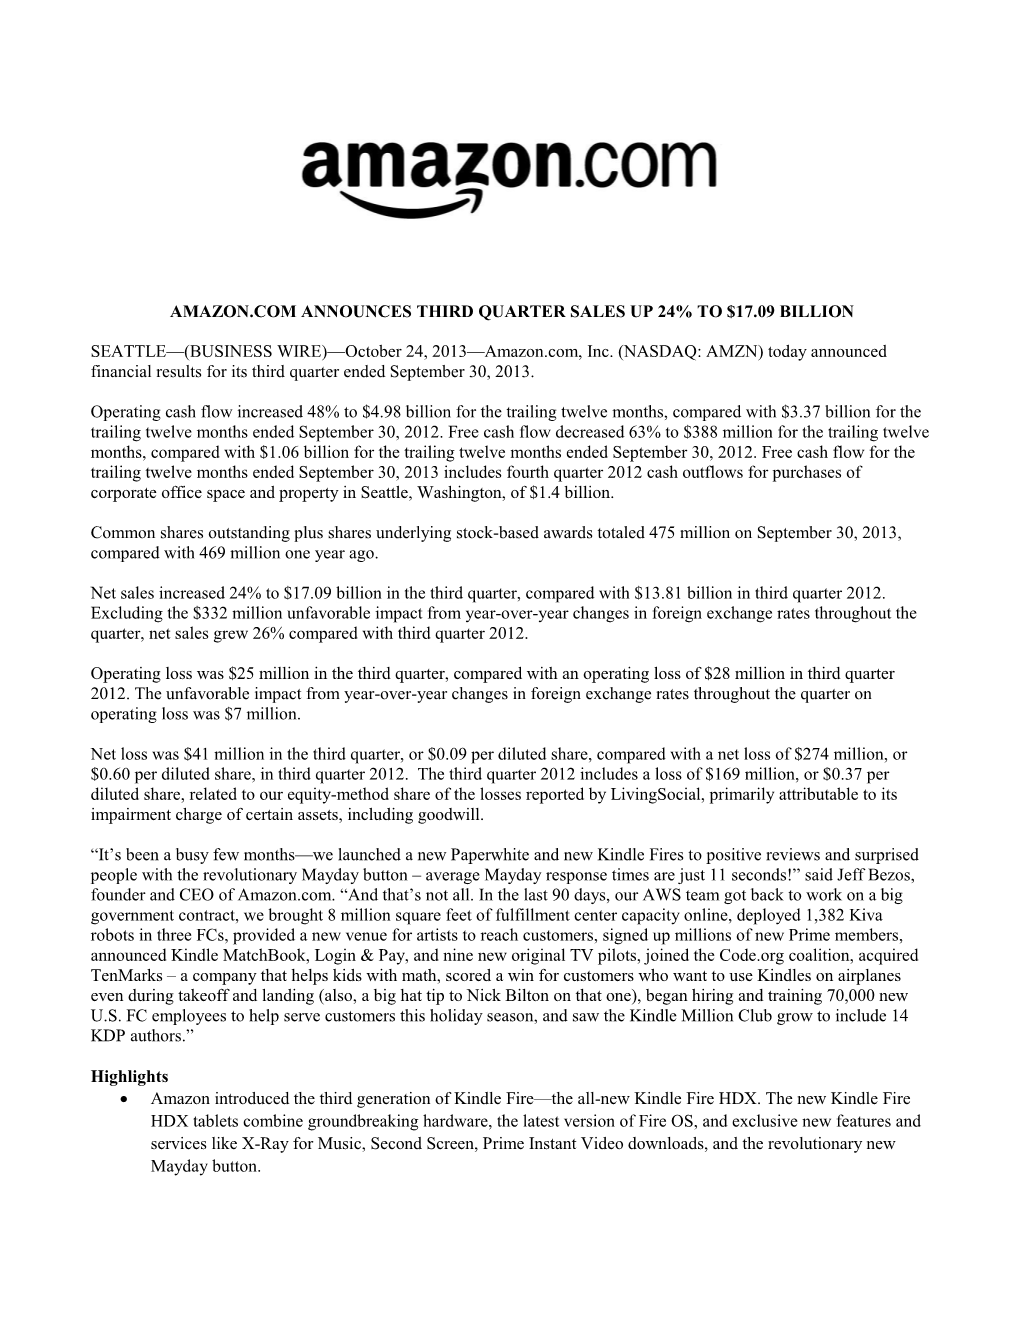 October 24, 2013—Amazon.Com, Inc